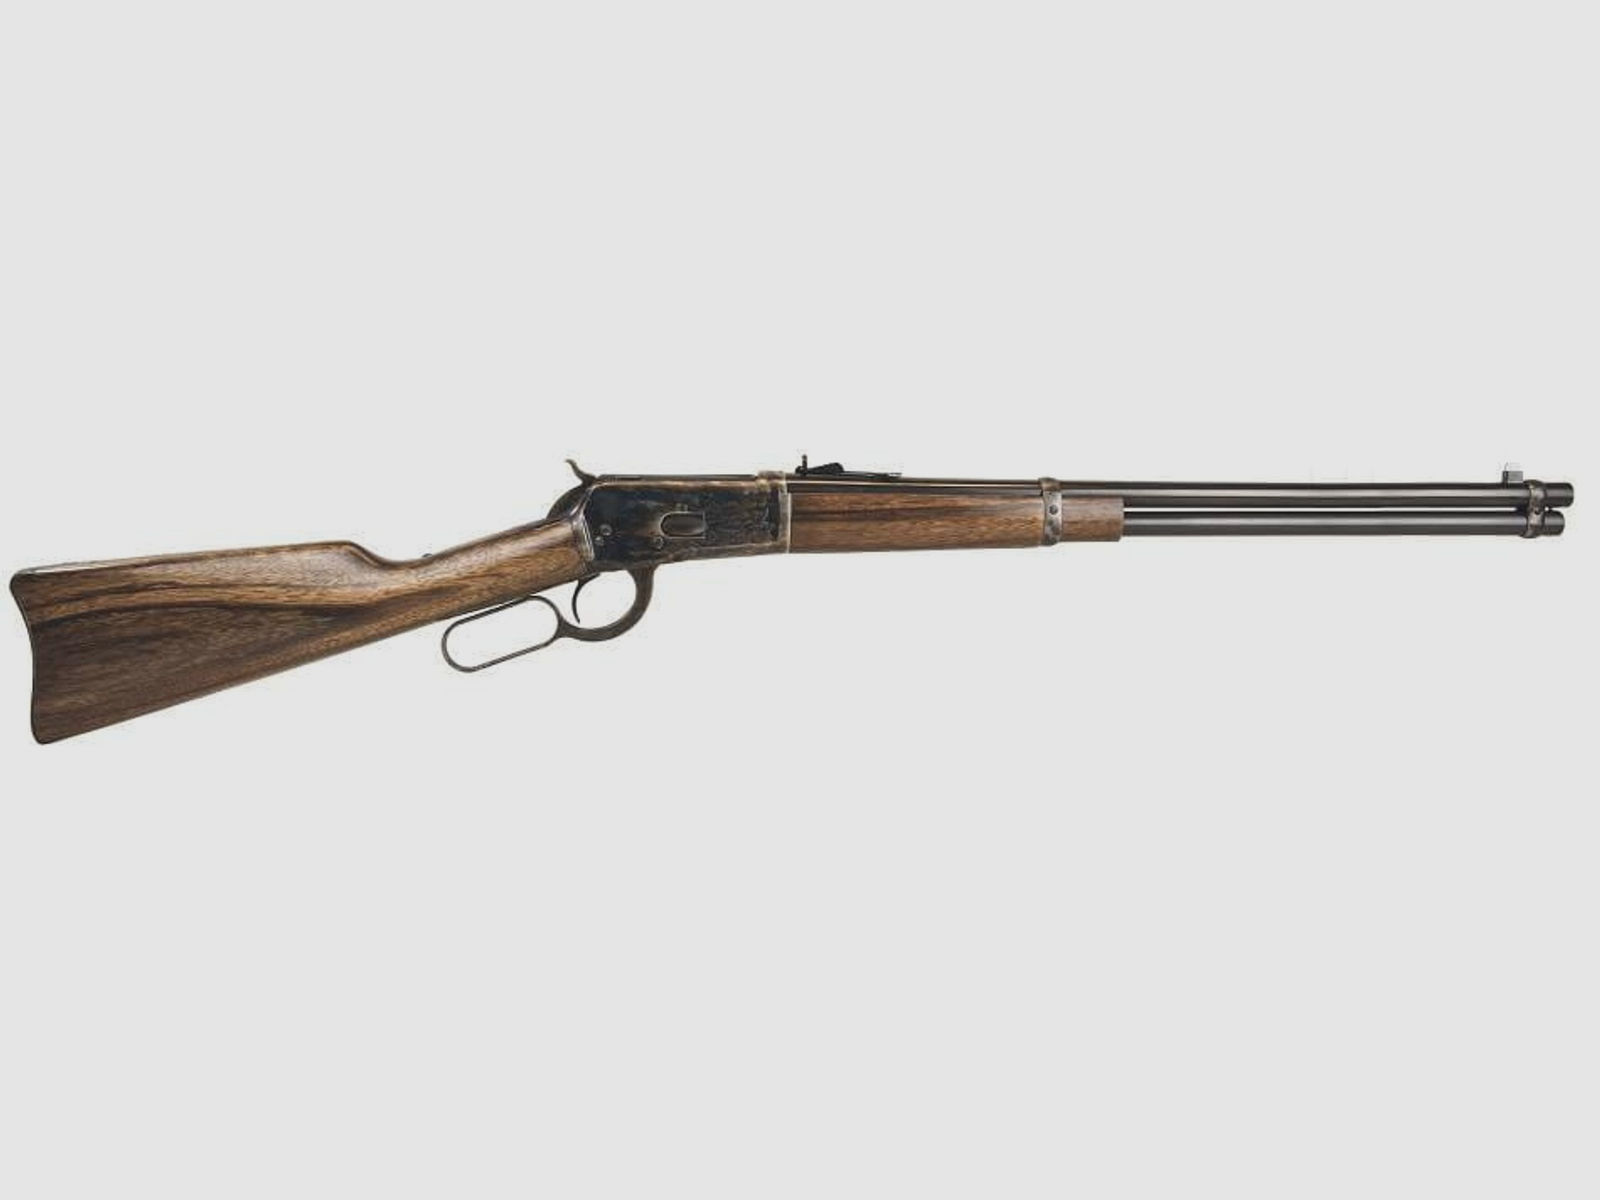 Chiappa 1892 Carbine - 20 Zoll Unterhebelrepetierbüchse Kal. .357 Mag.